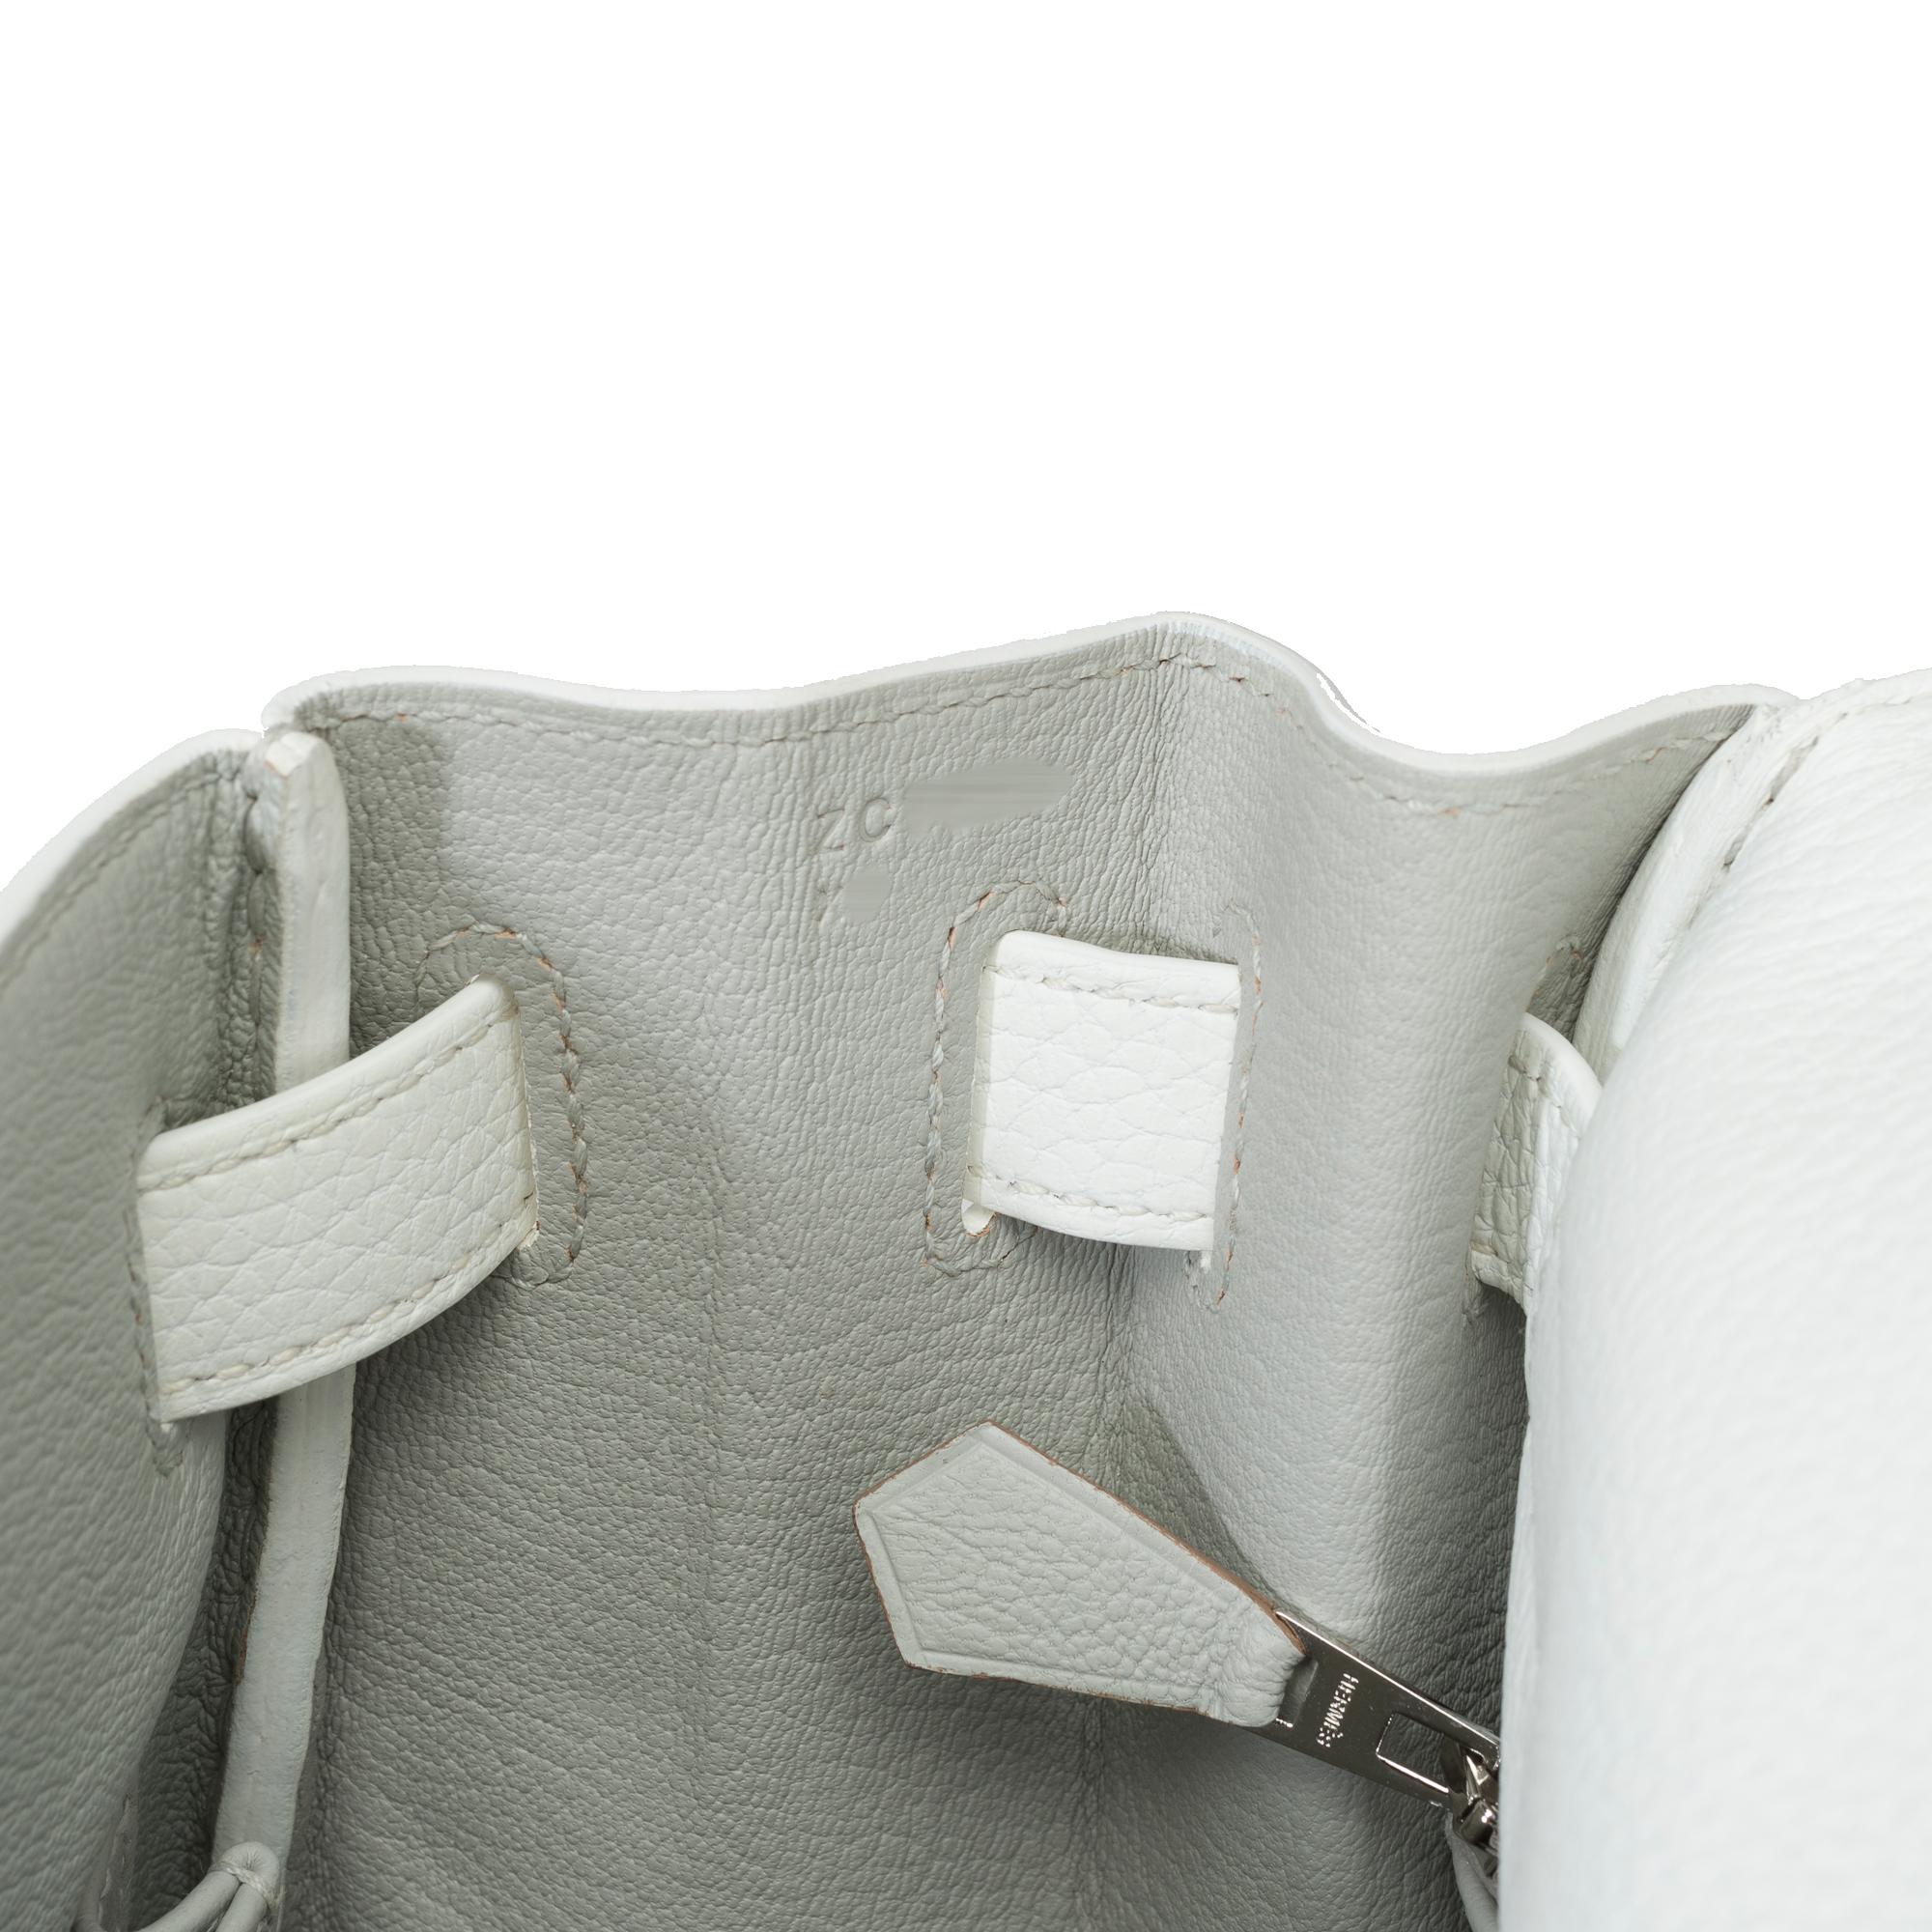 Hermès Kelly 32 handbag strap (HSO) in White & Grey interior leather, BSHW 4